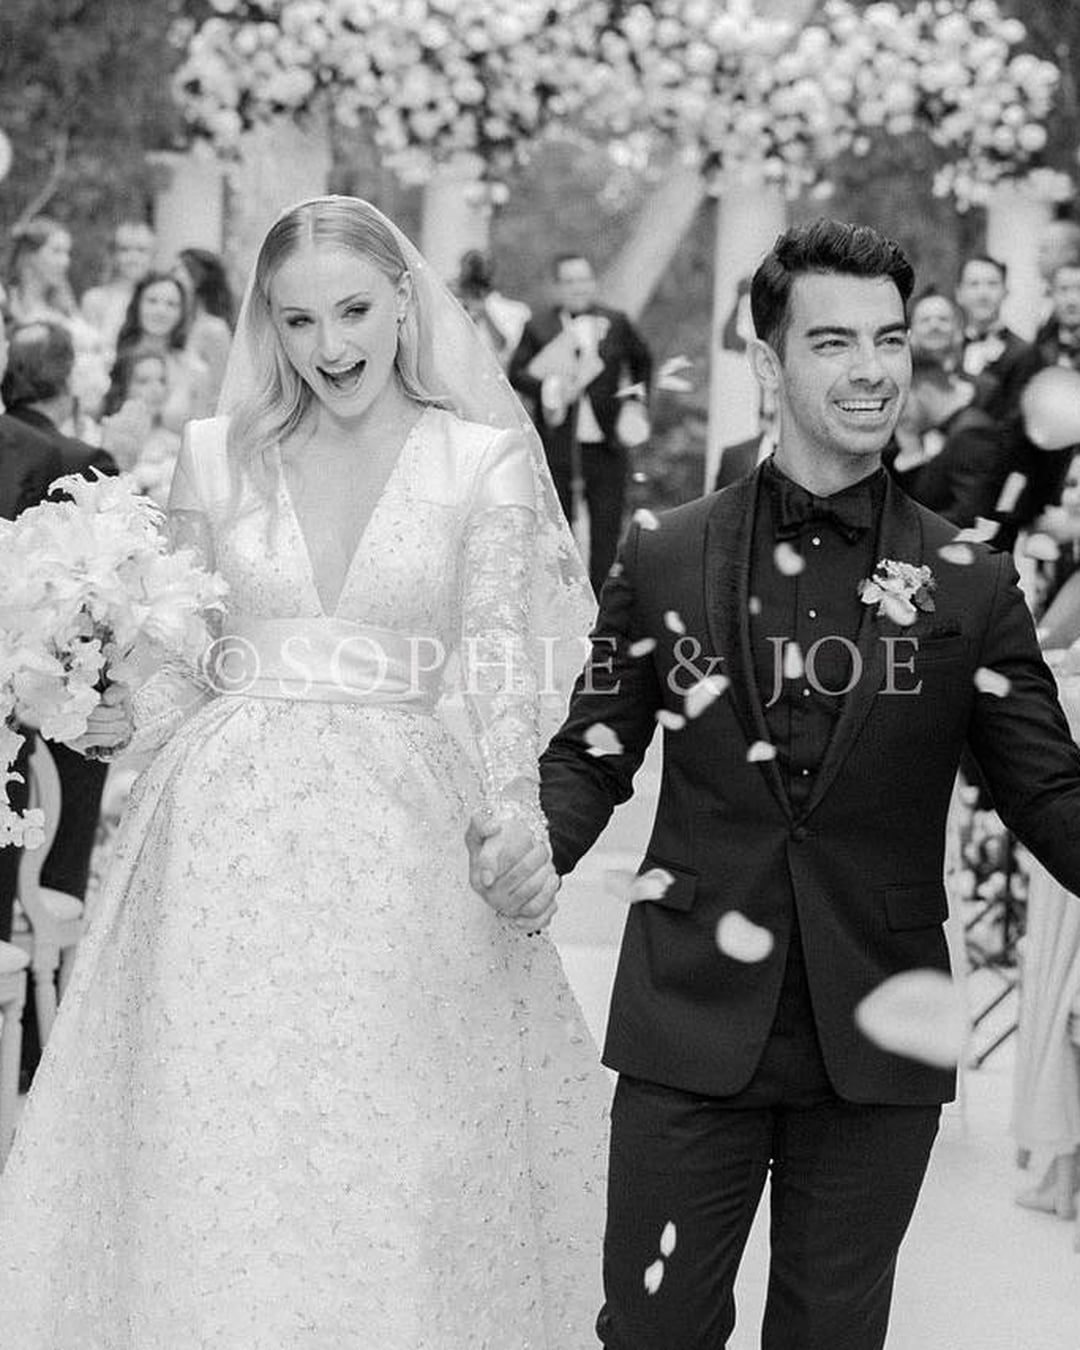 Sophie Turner and Joe Jonas share wedding photo - Entertainment